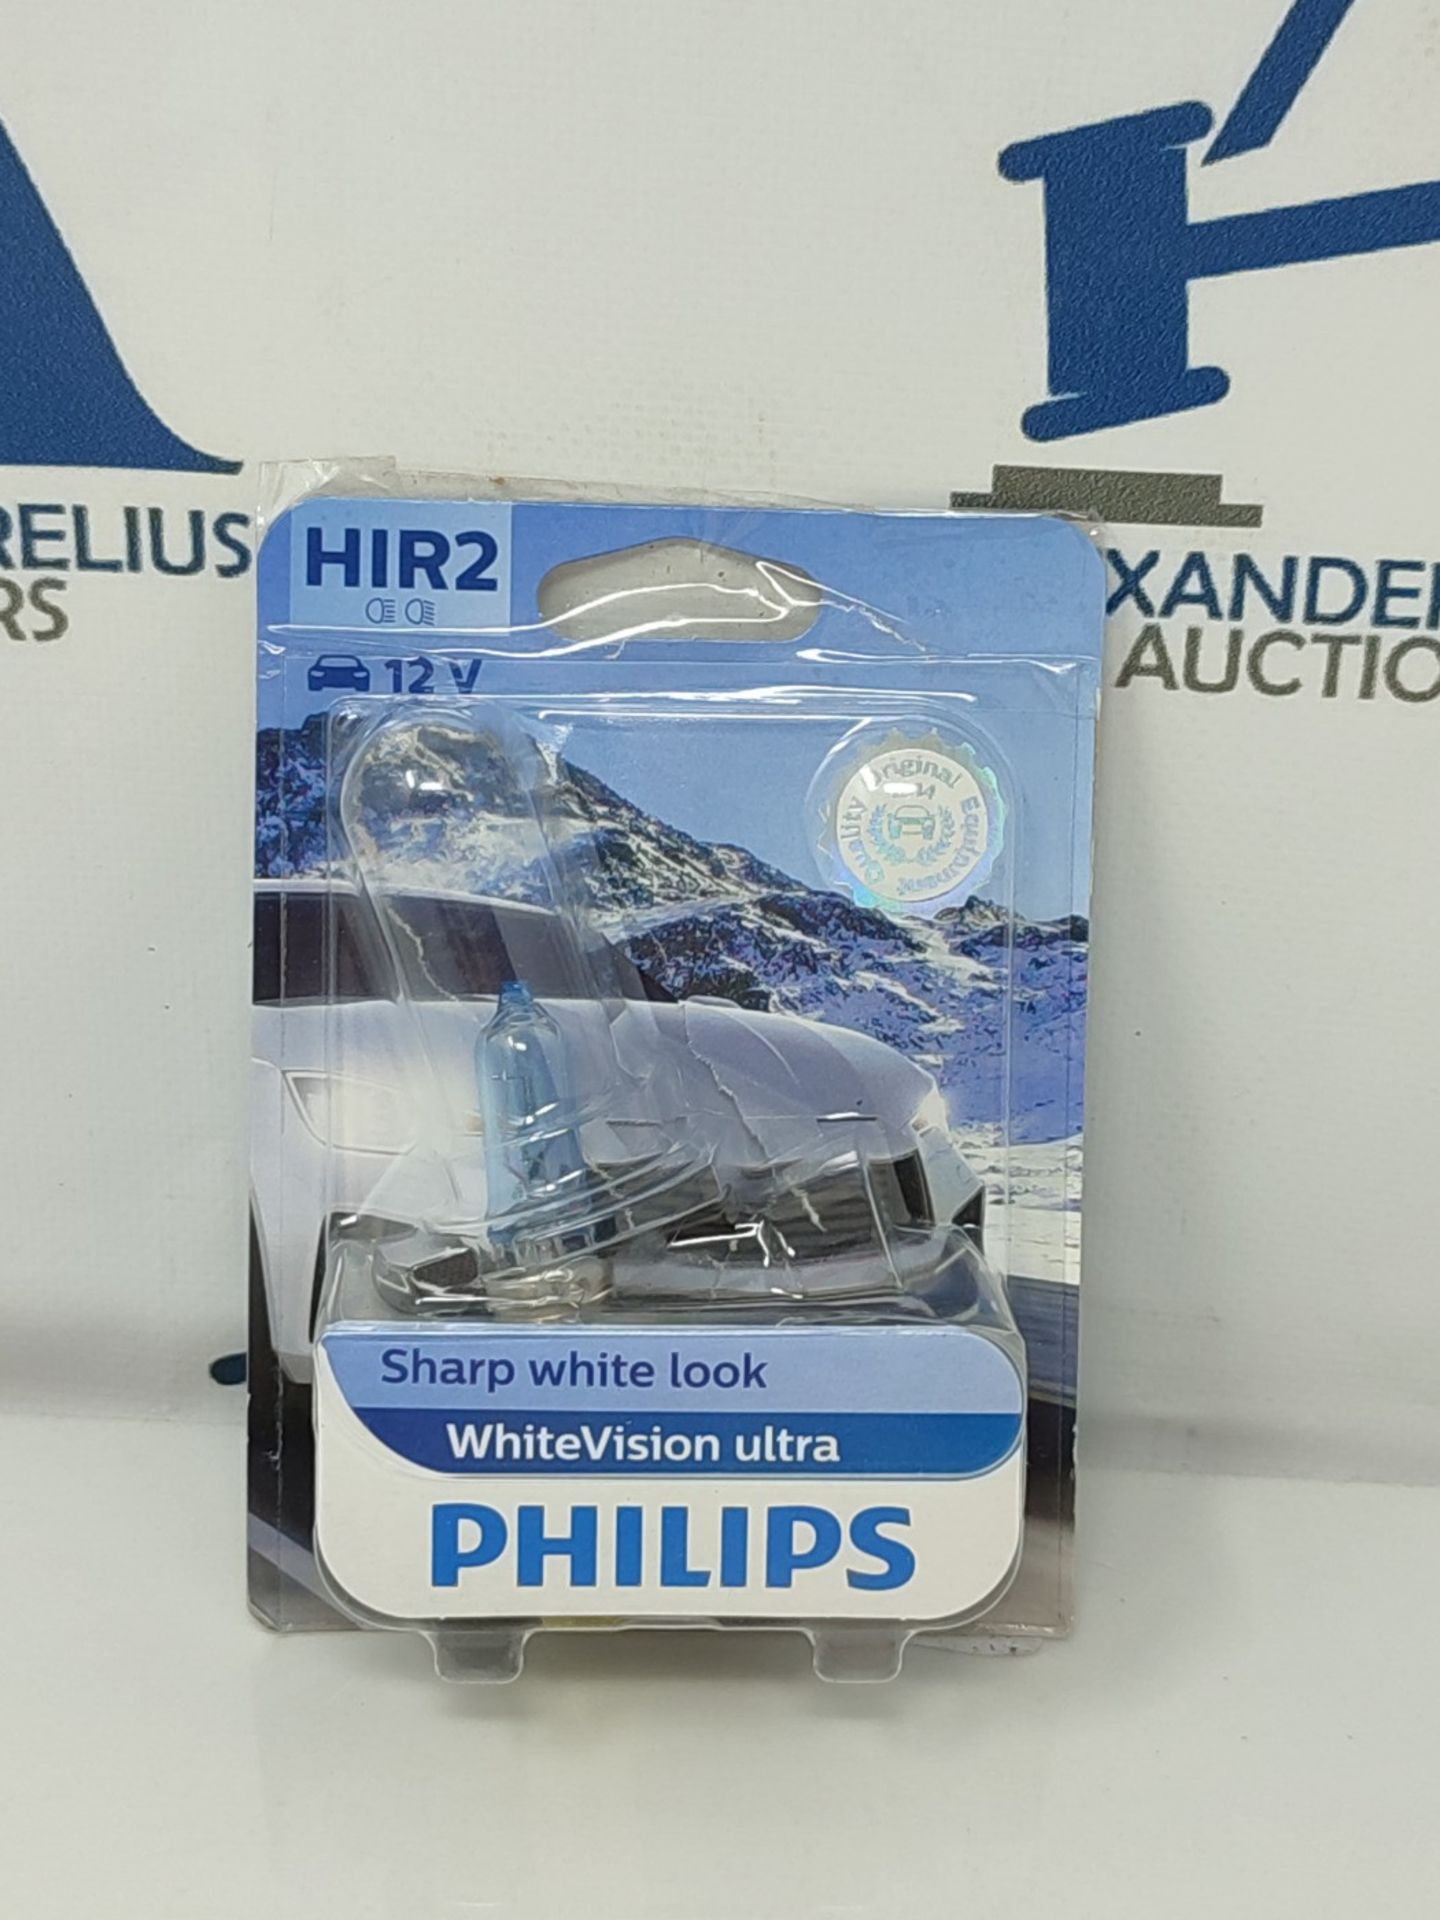 Philips WhiteVision ultra HIR2 car headlight bulb, single blister - Image 2 of 3